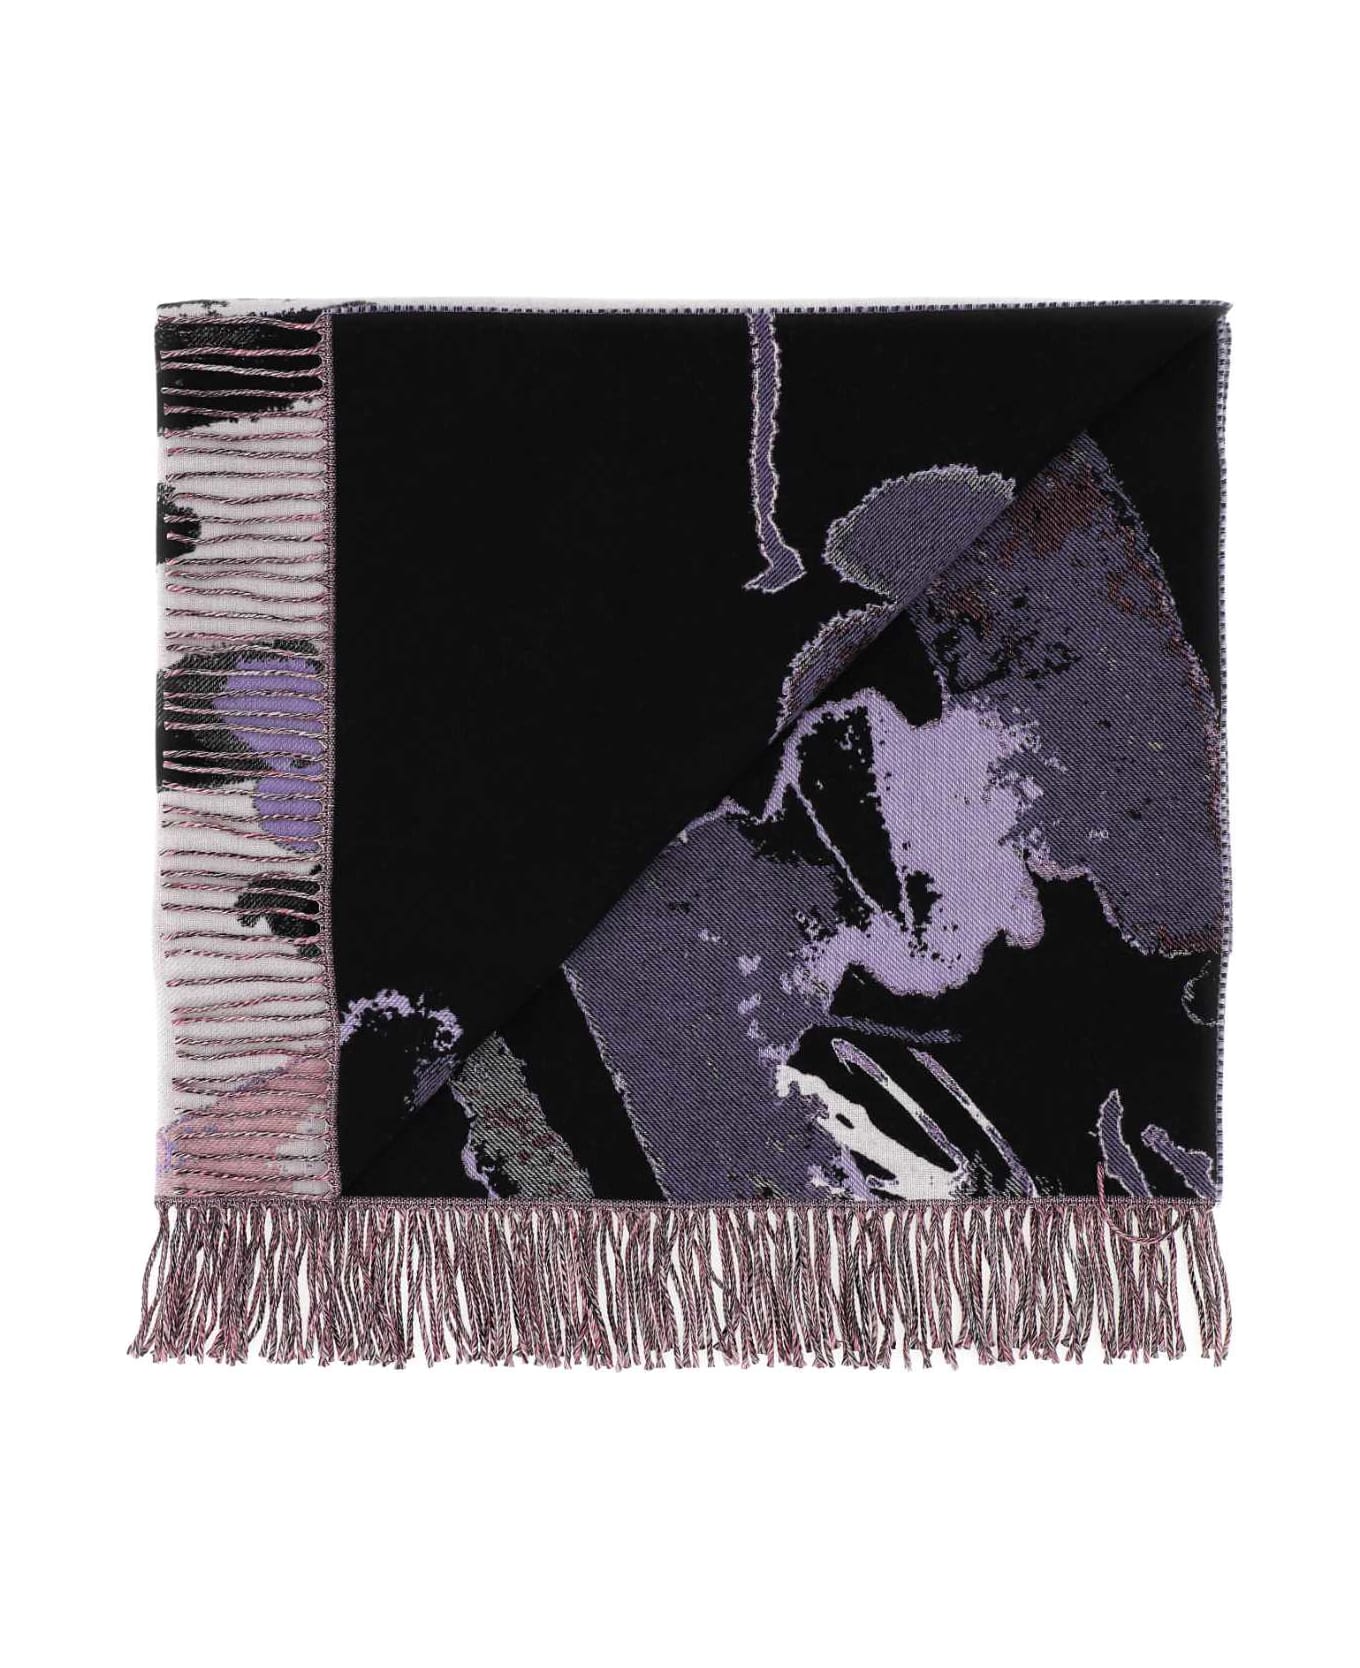 Alexander McQueen Embroidered Wool Blend Blanket - 9272 ブランケット